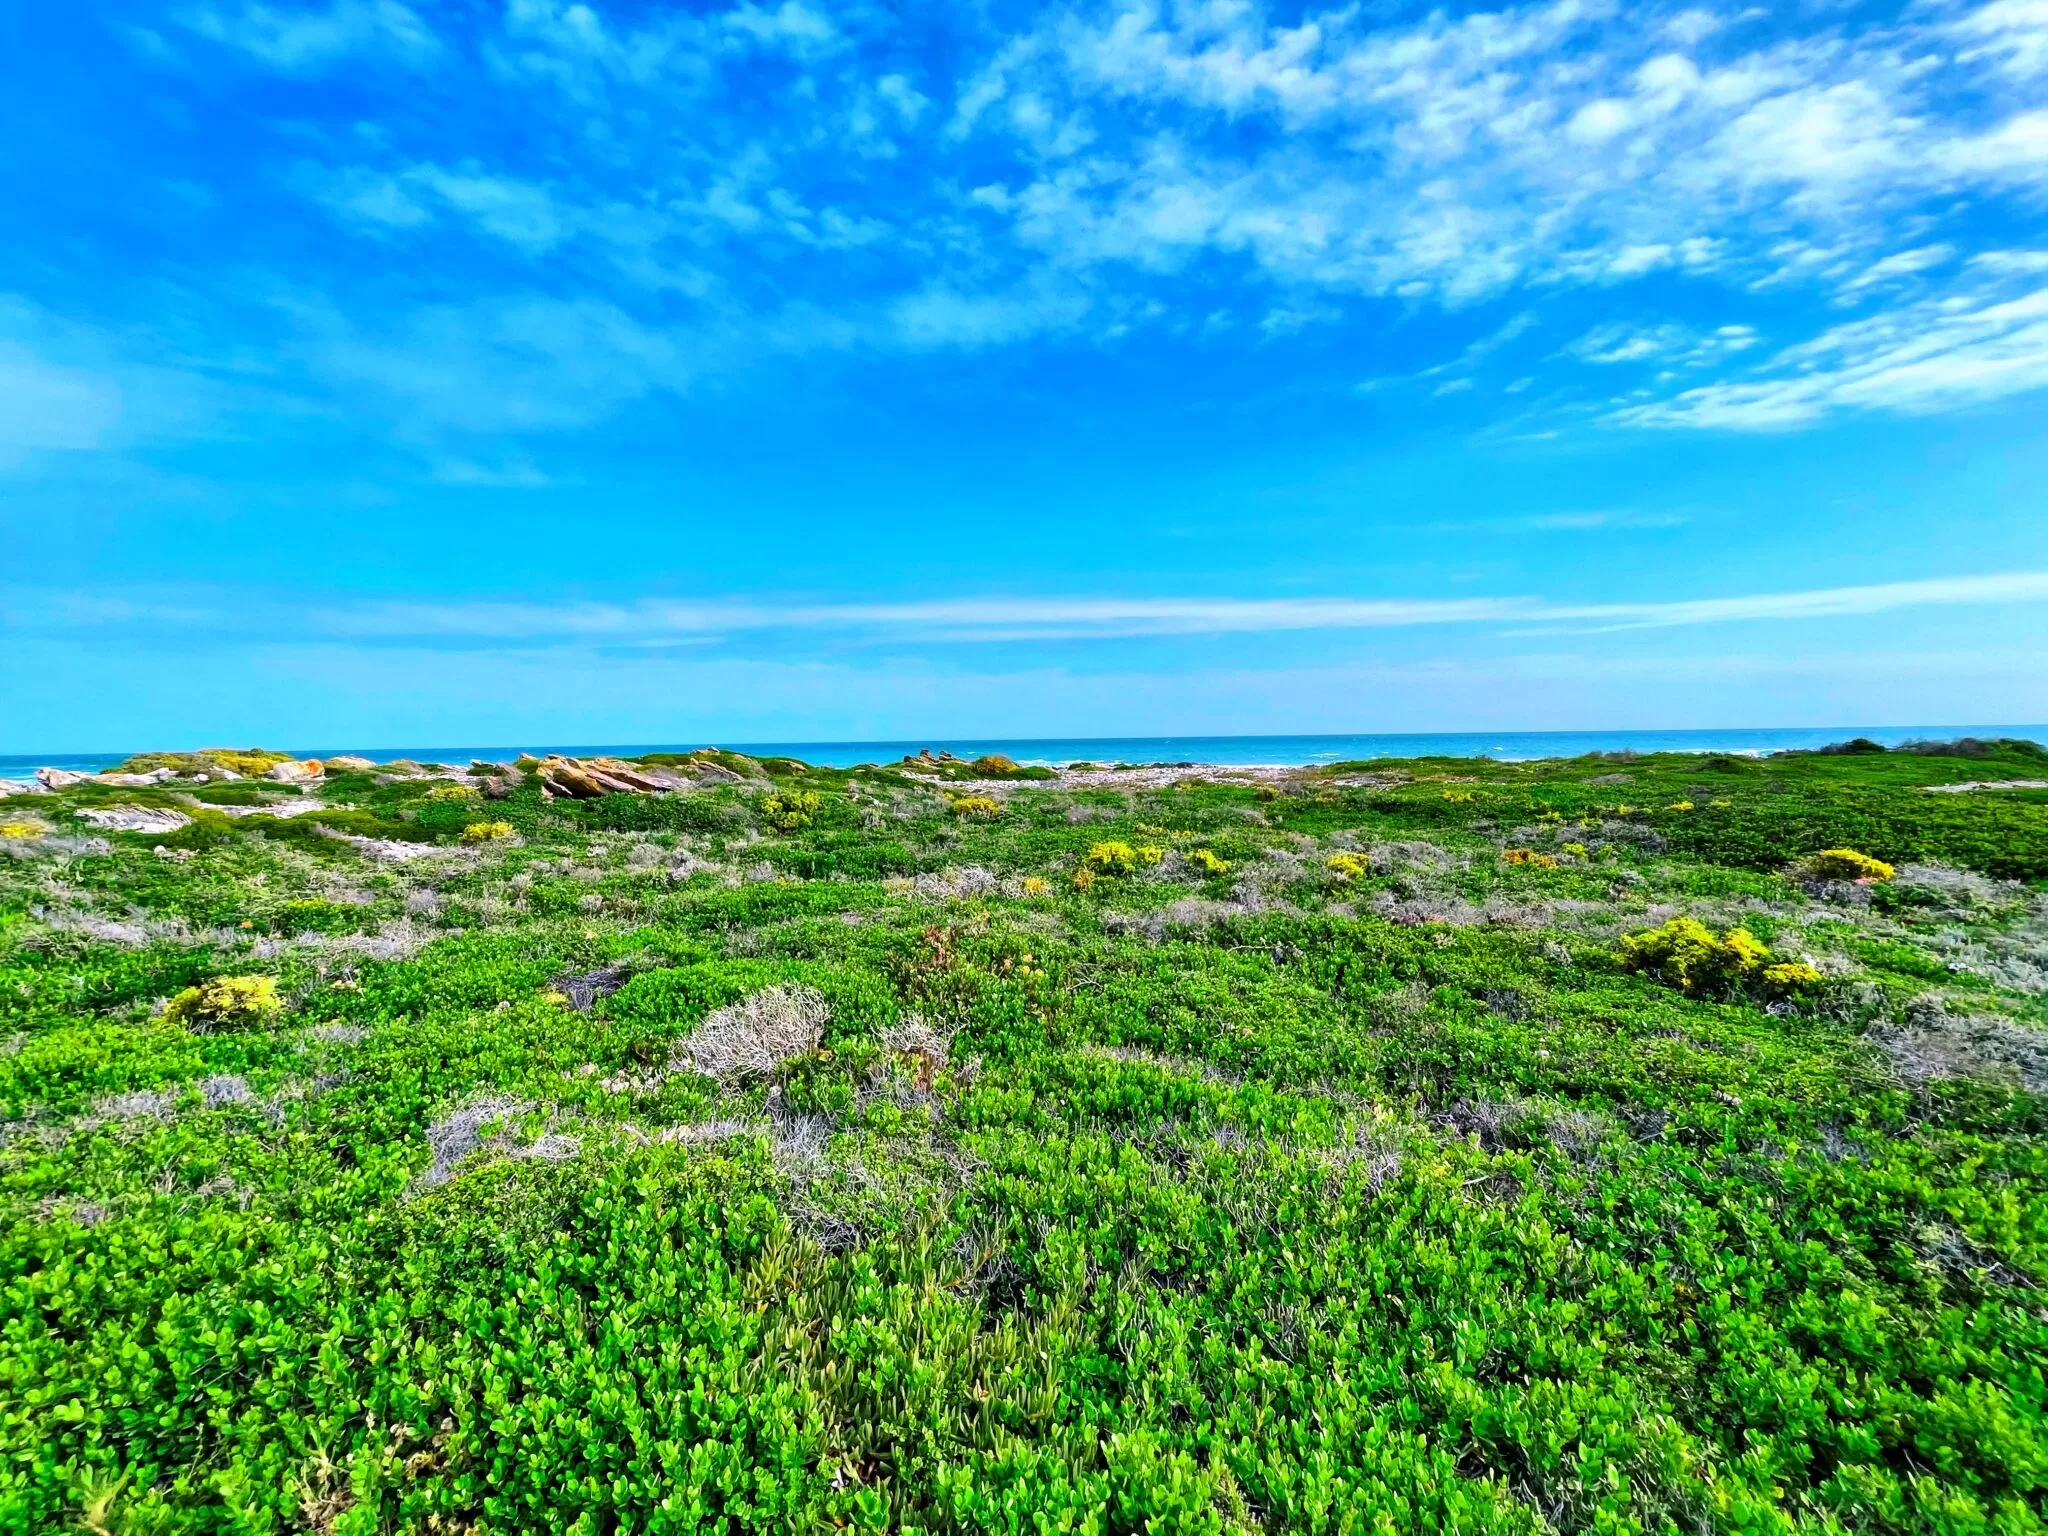 Cape Agulhas National Park vegetation